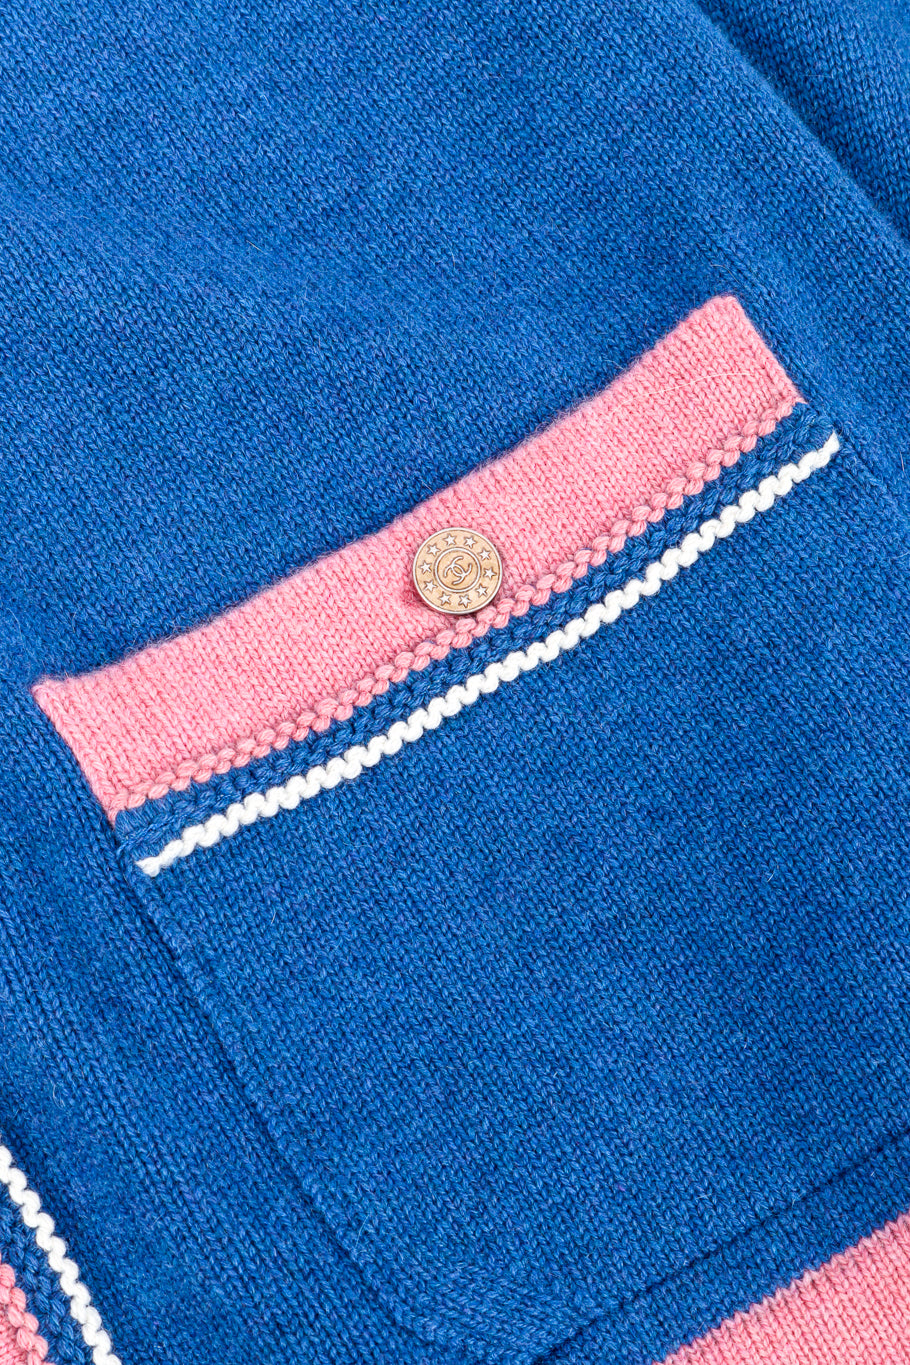 Chanel Cashmere Sweater pocket closeup @recess la